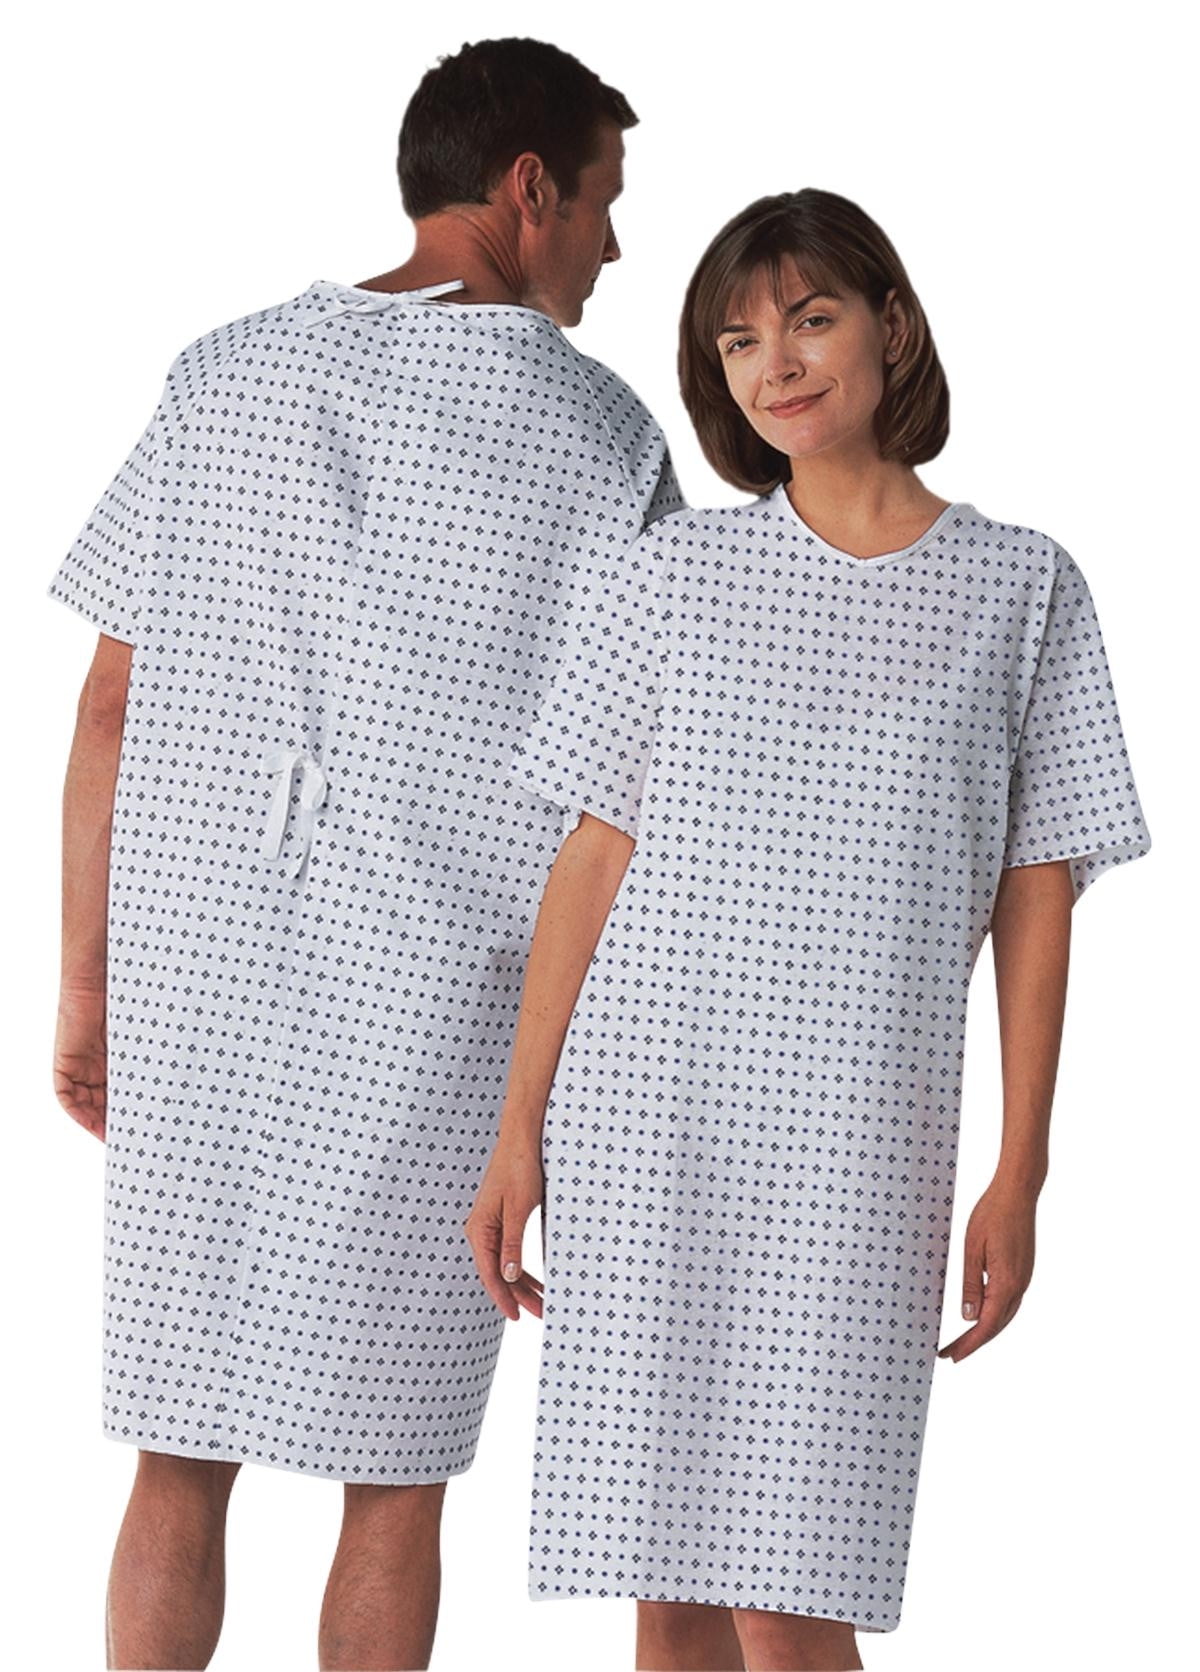 DMI Convalescent Hospital Gown with Back Tie, Machine Washable, Print -  Walmart.com